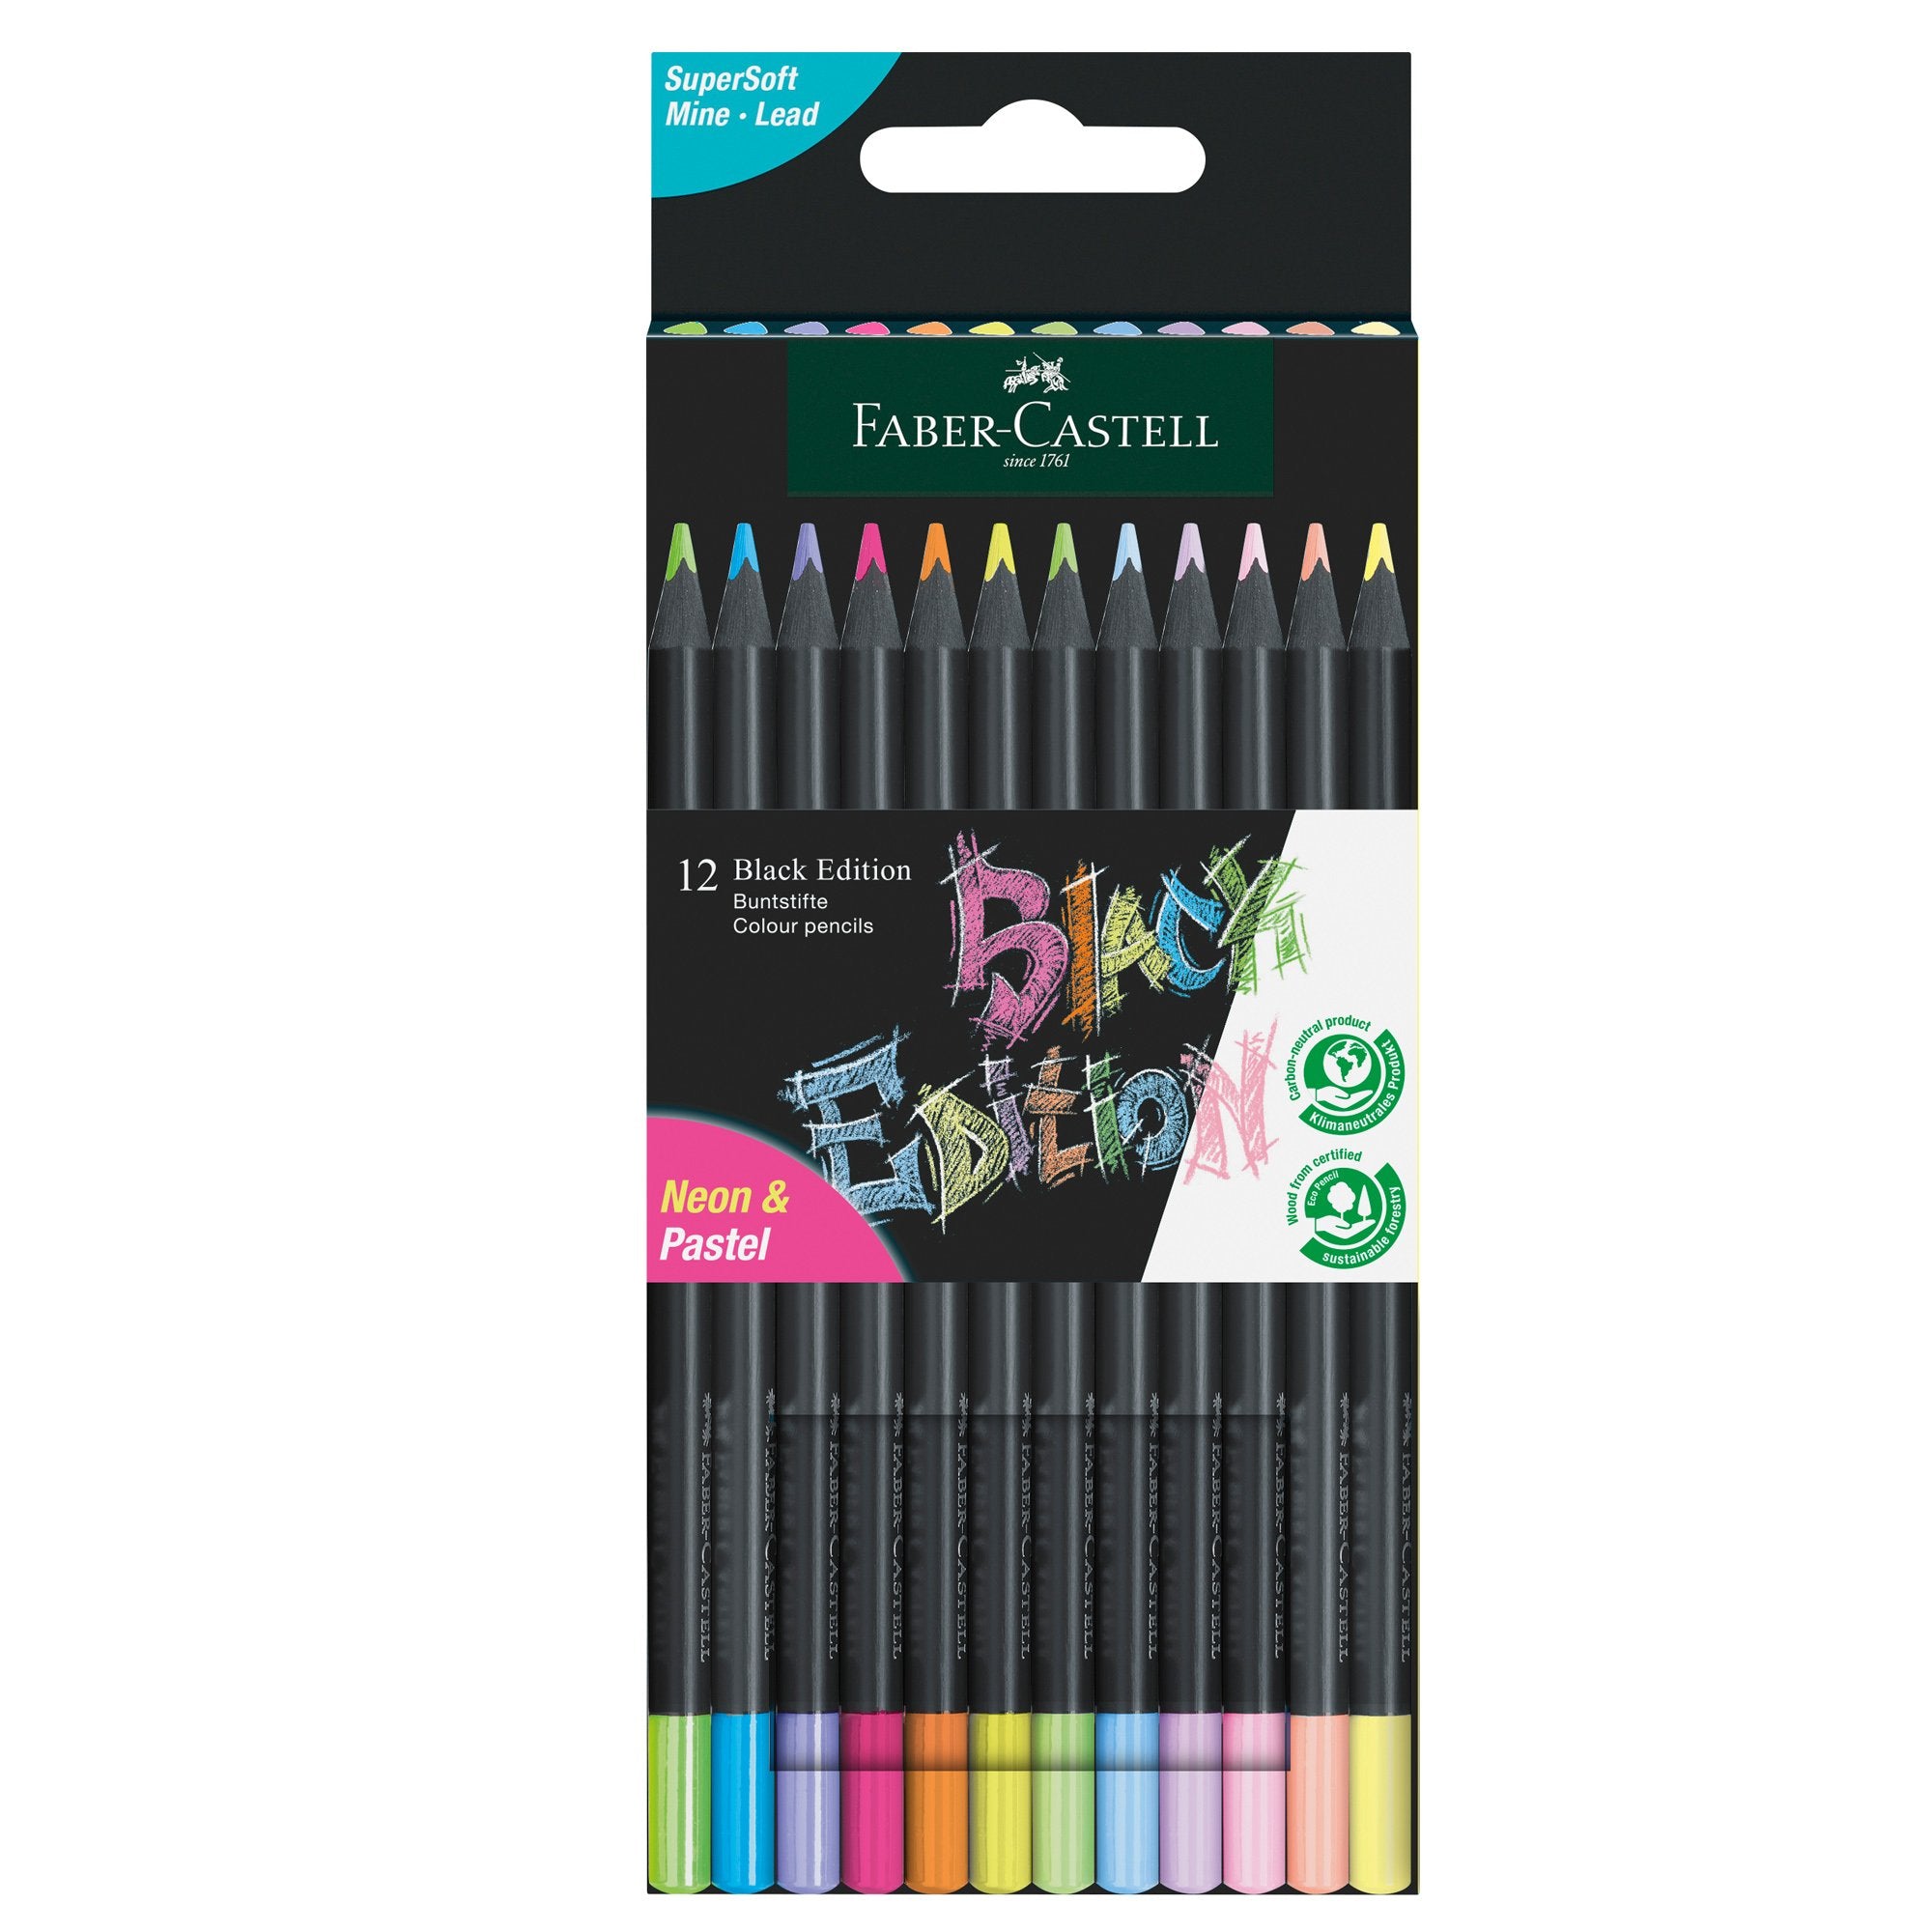 faber-castell-astuccio-12-matite-triangolari-black-edition-pastel-neon